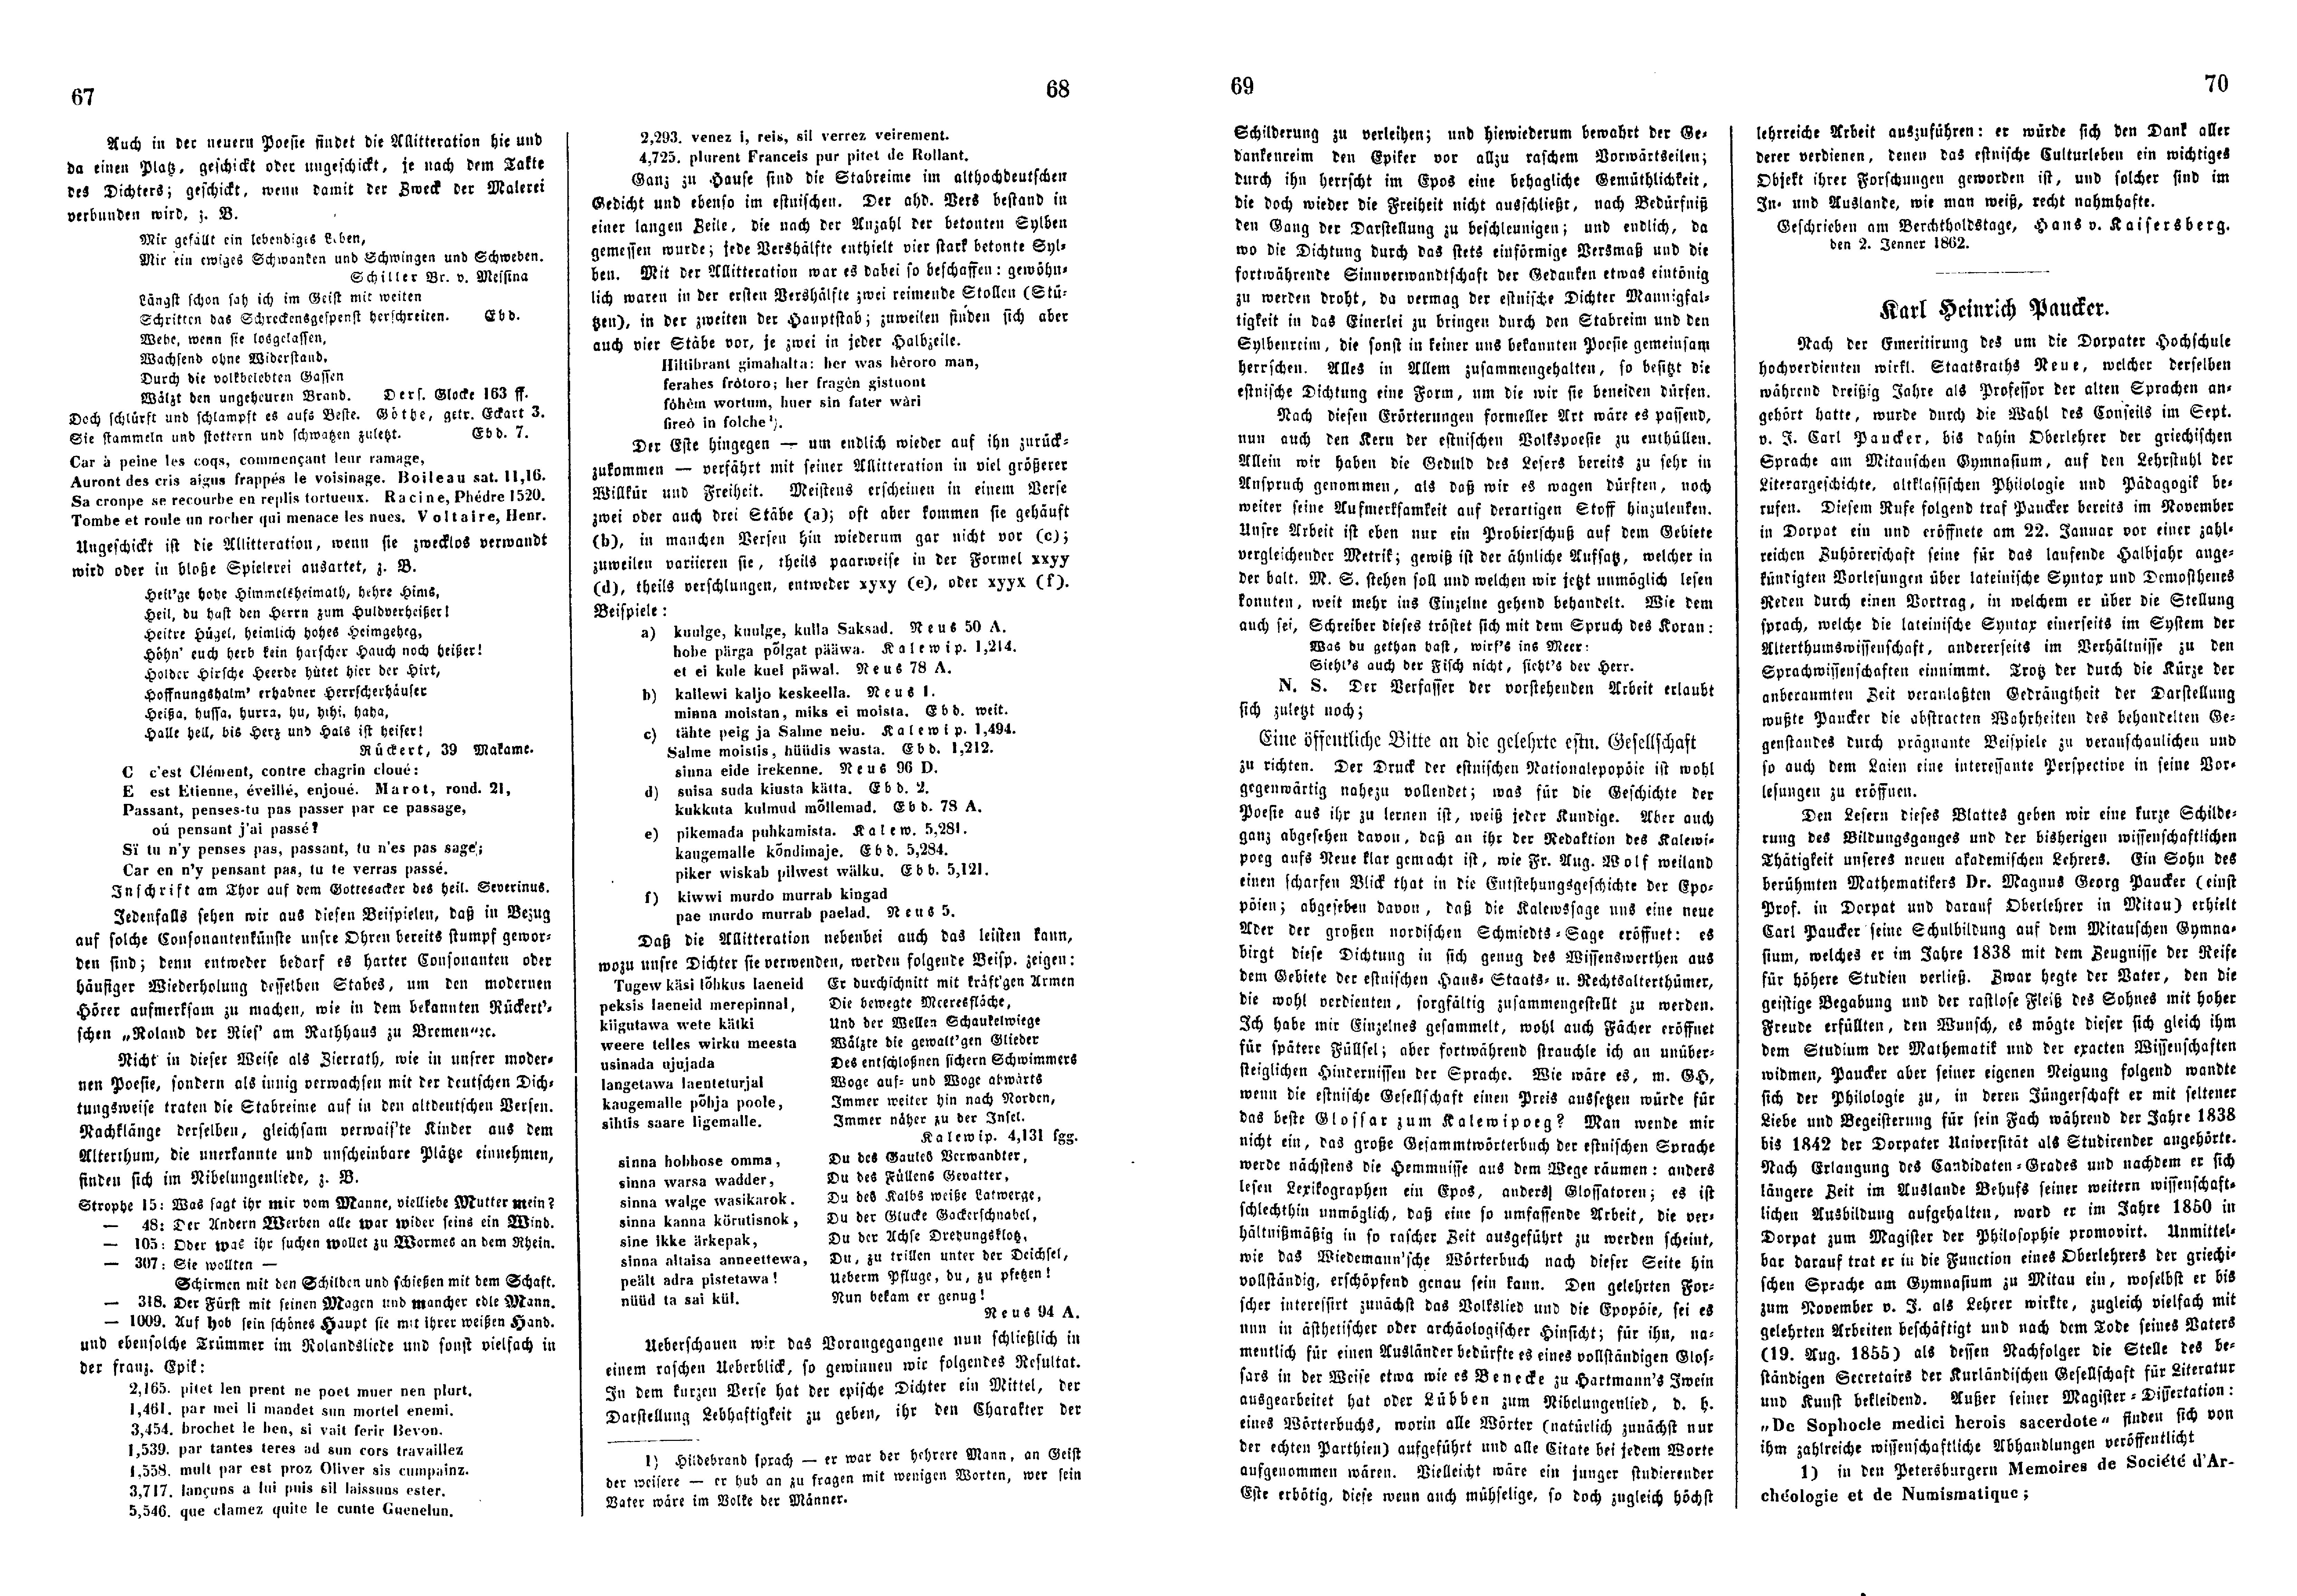 Das Inland [27] (1862) | 21. (67-70) Main body of text